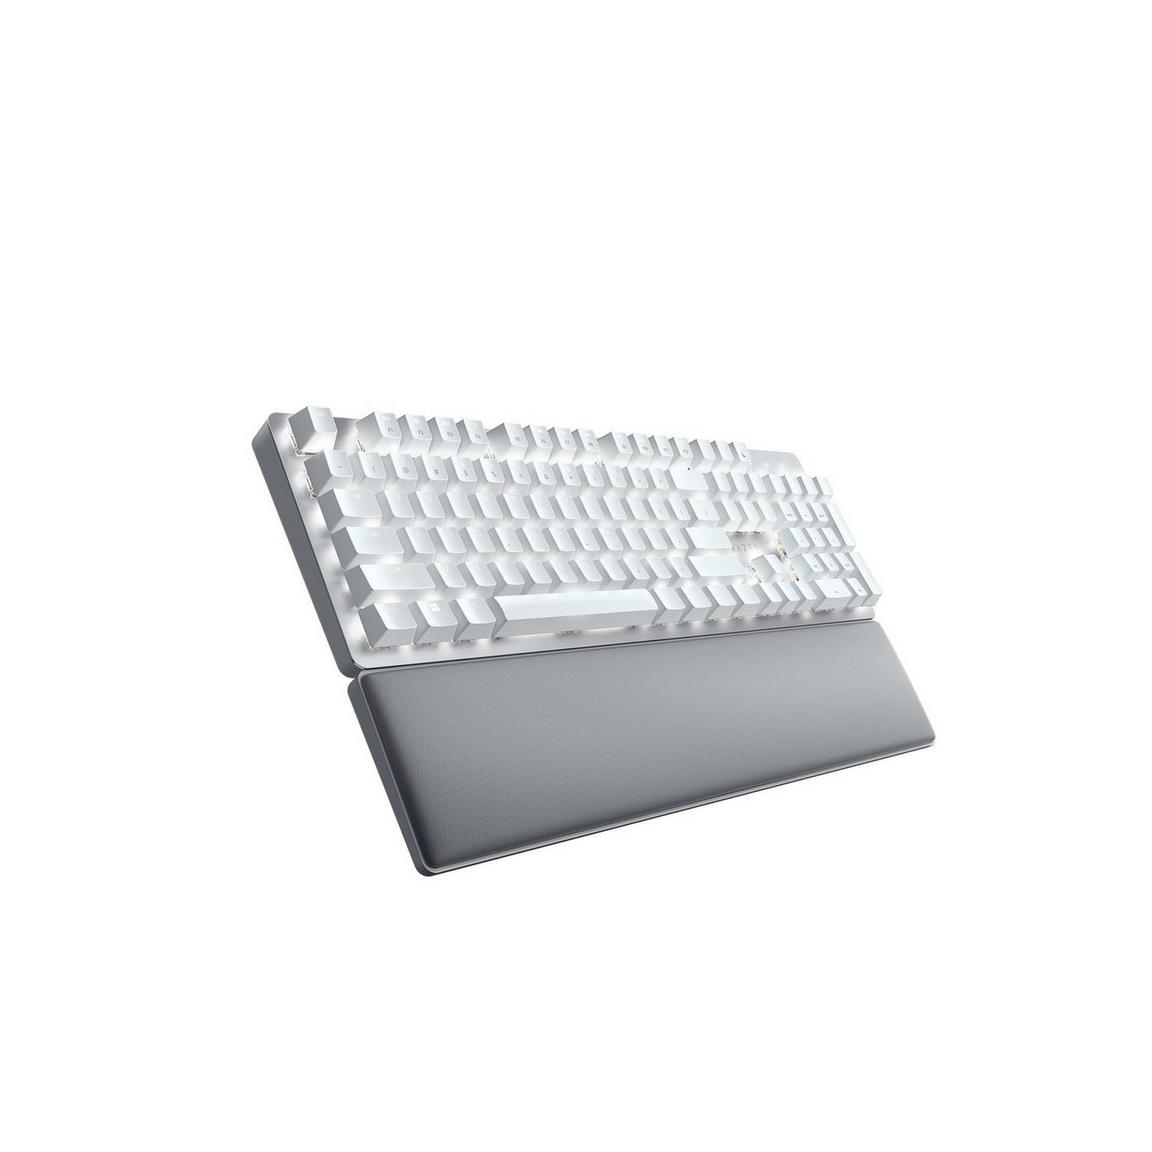 Razer Pro Type Ultra Wireless Mechanical Keyboard $80